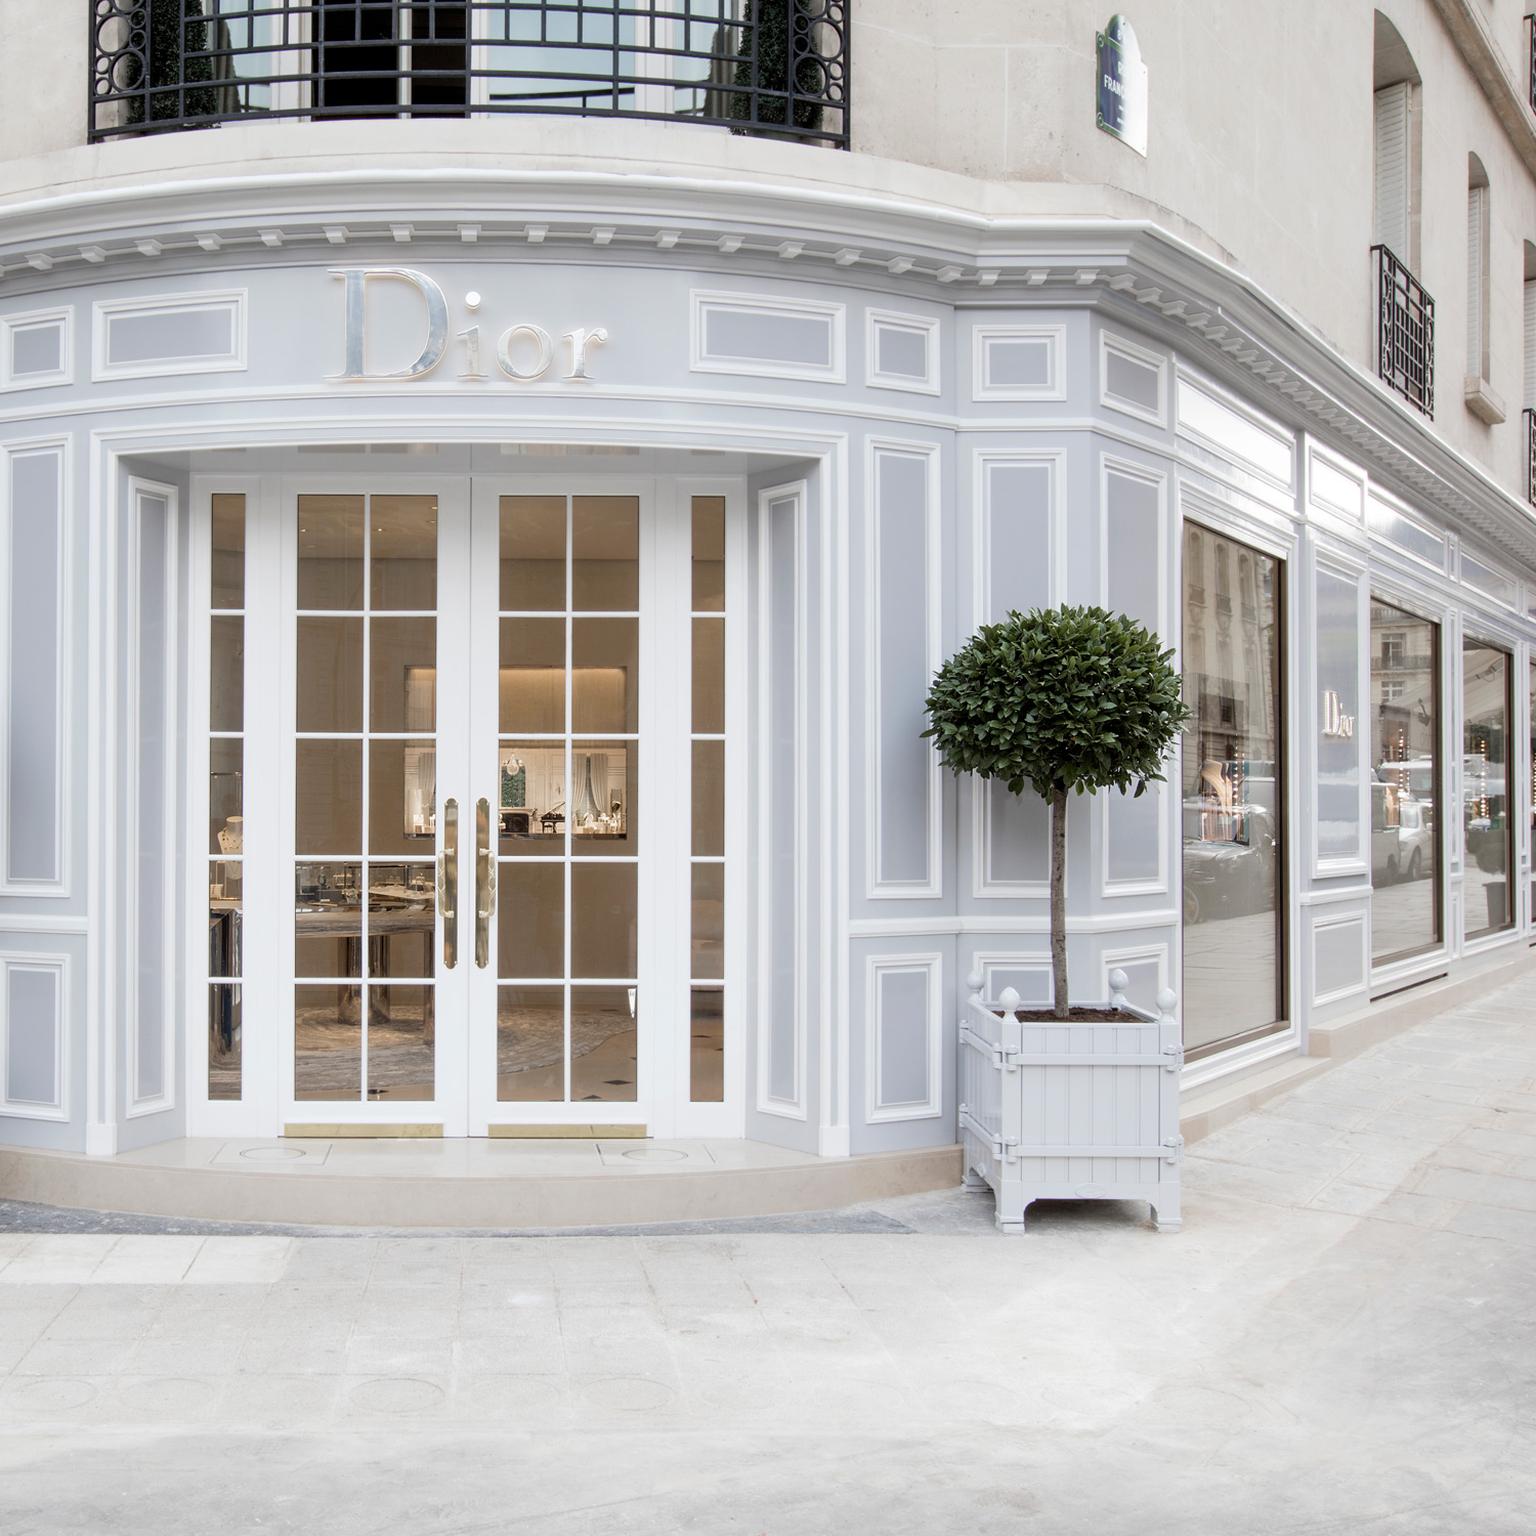 Luxury Boutique of Louis Vuitton at Montaigne avenue in Paris